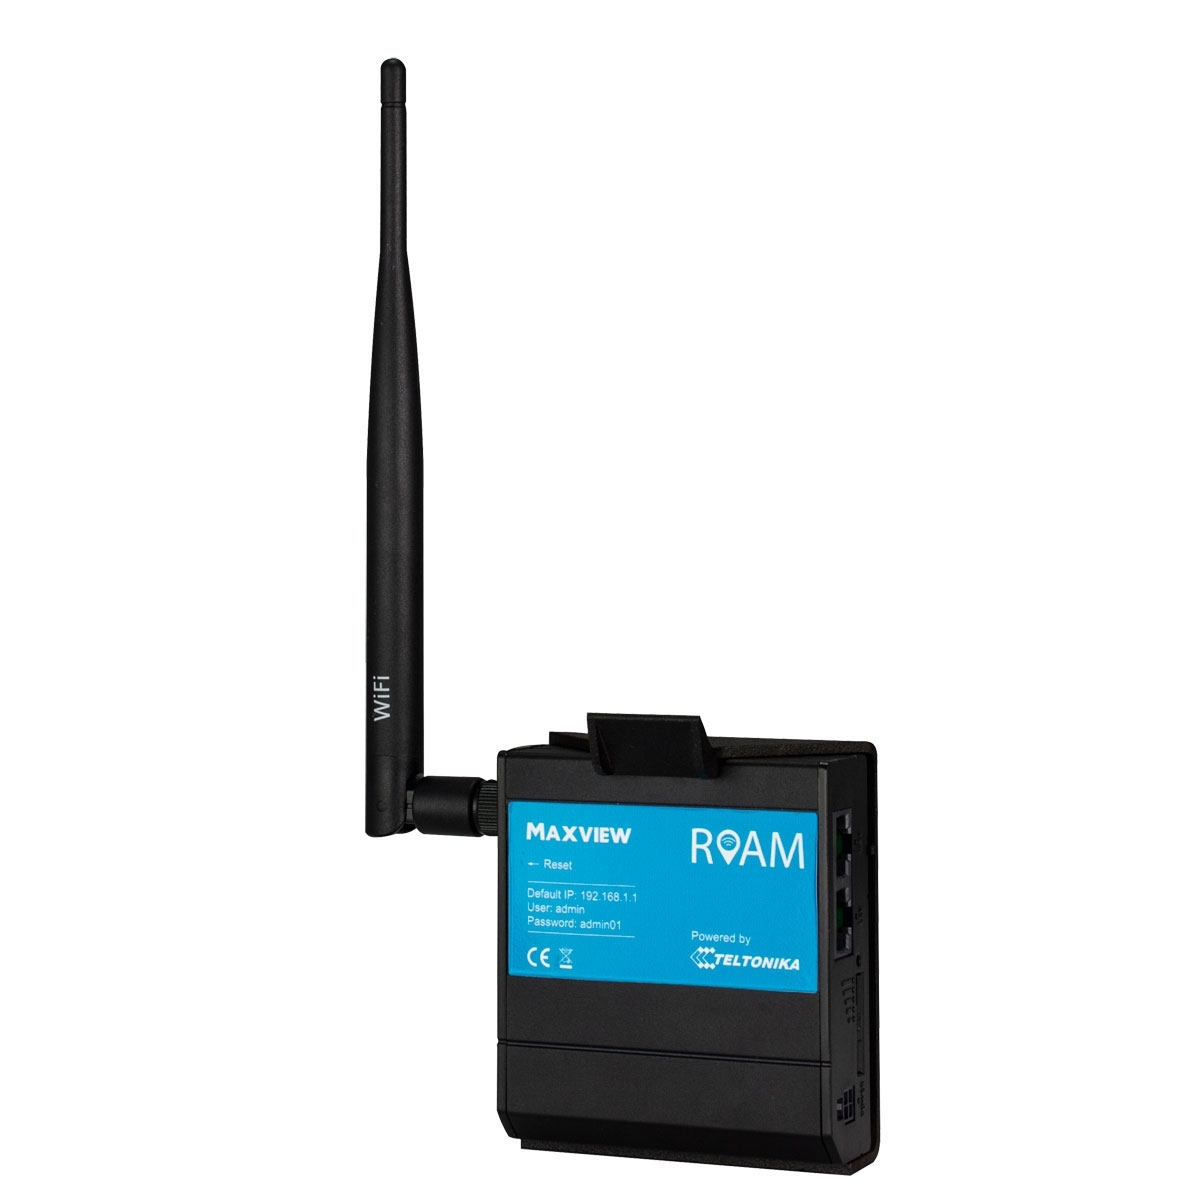 MAXVIEW Roam Internetantenne LTE-WiFi Router weiss 40010